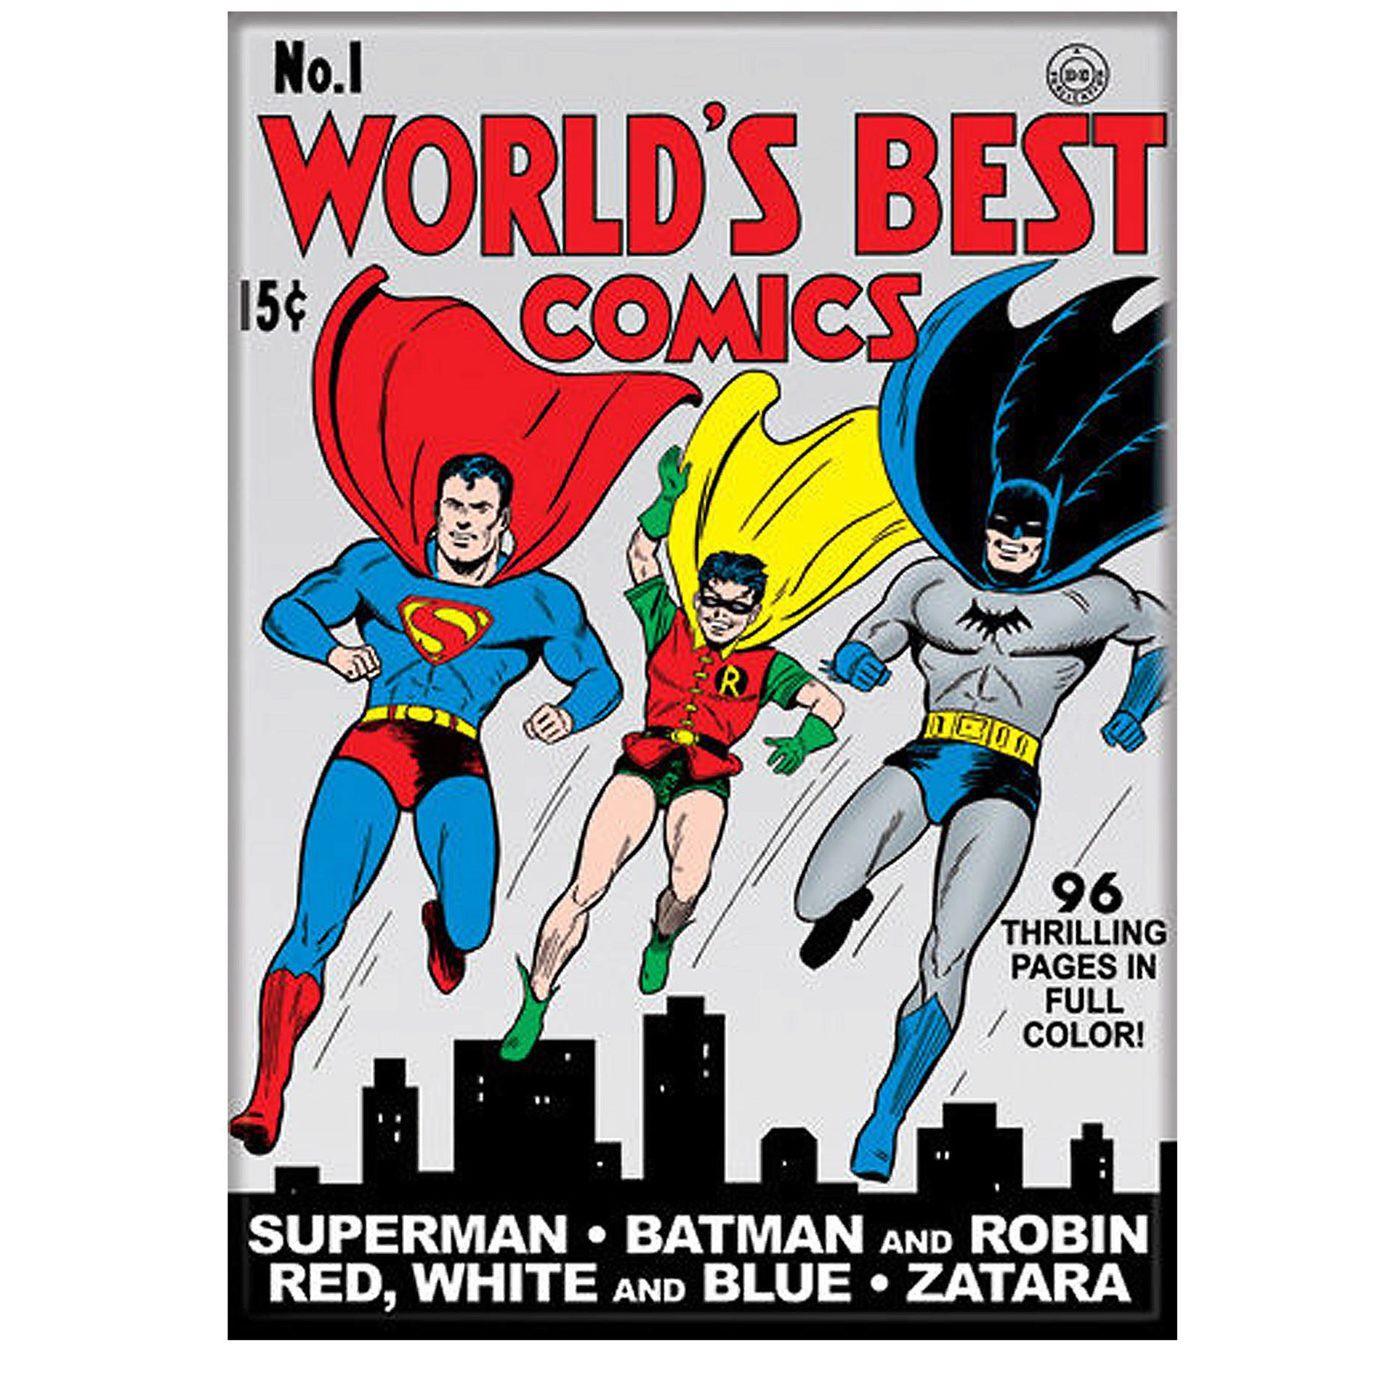 World's Best Comics #1 Cover Magnet